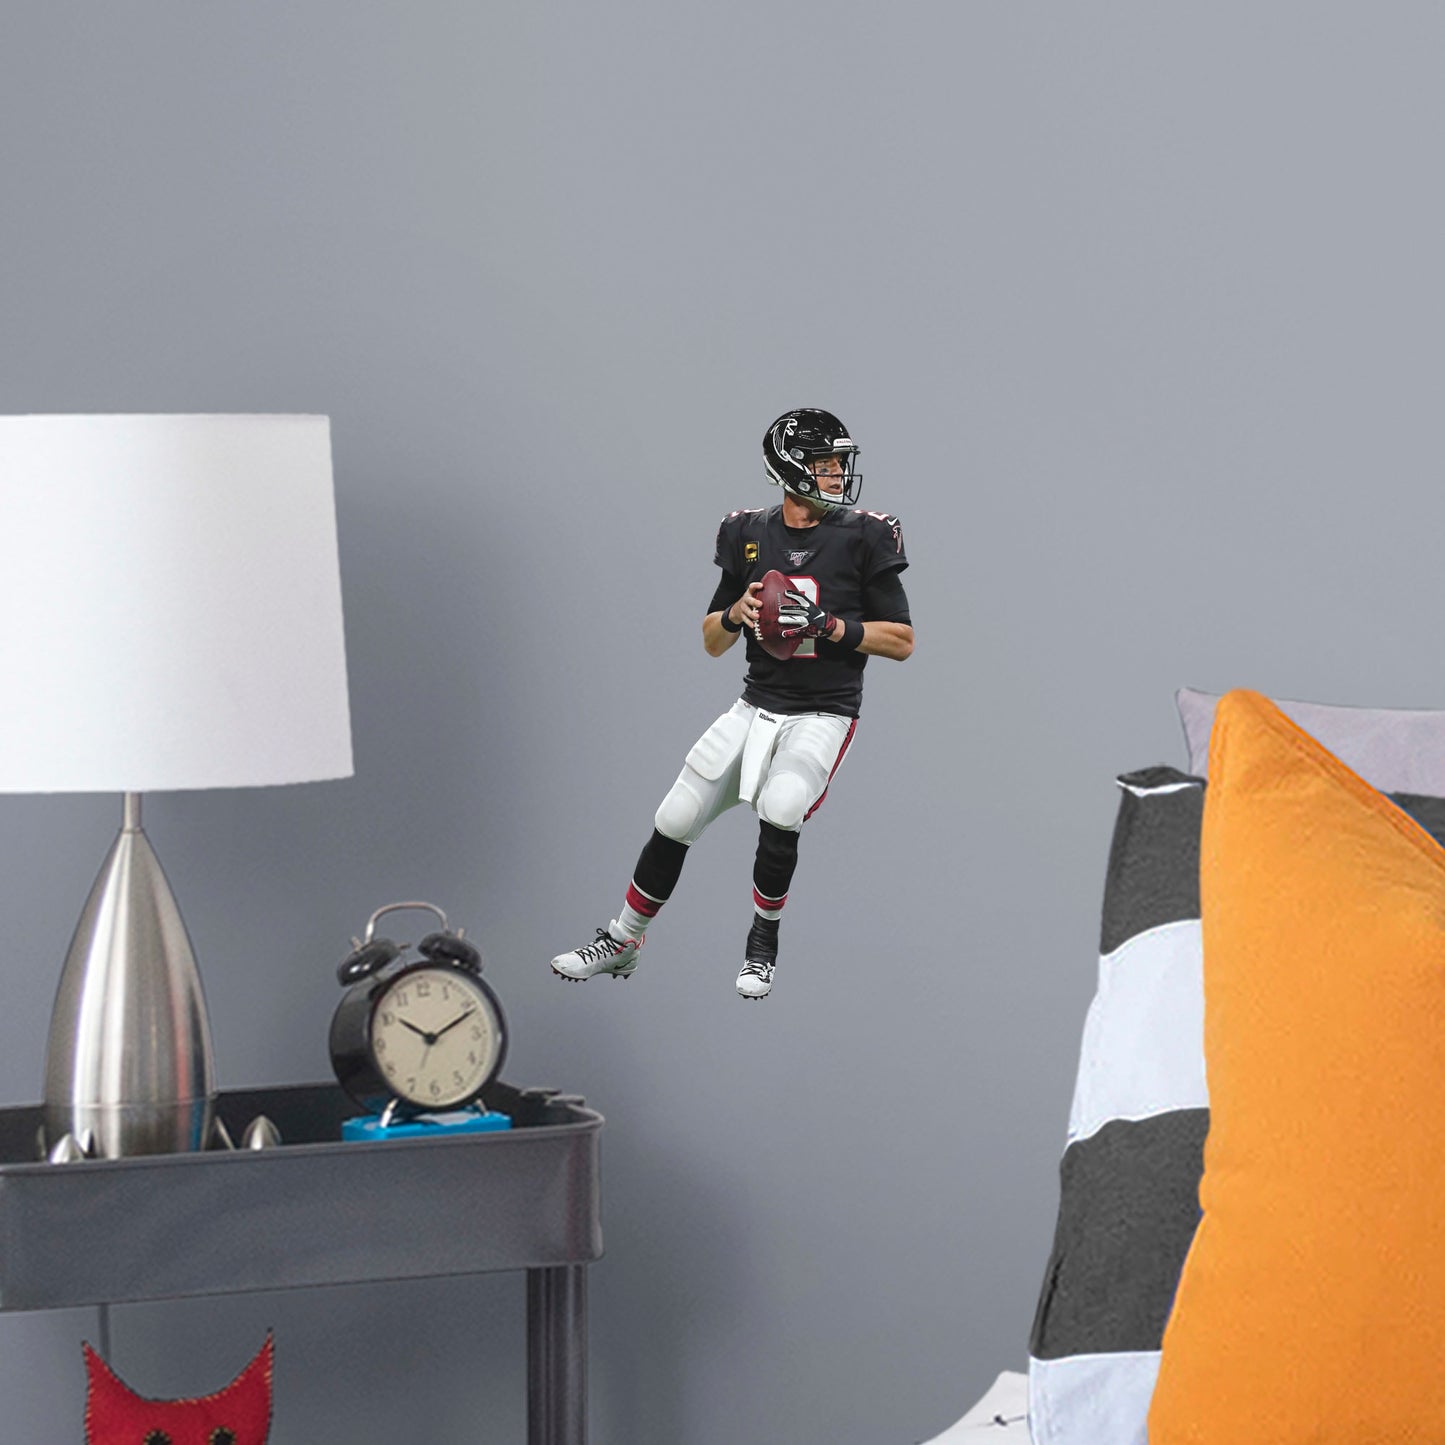 Atlanta Falcons: Matt Ryan Throwback        - Officially Licensed NFL Removable Wall   Adhesive Decal